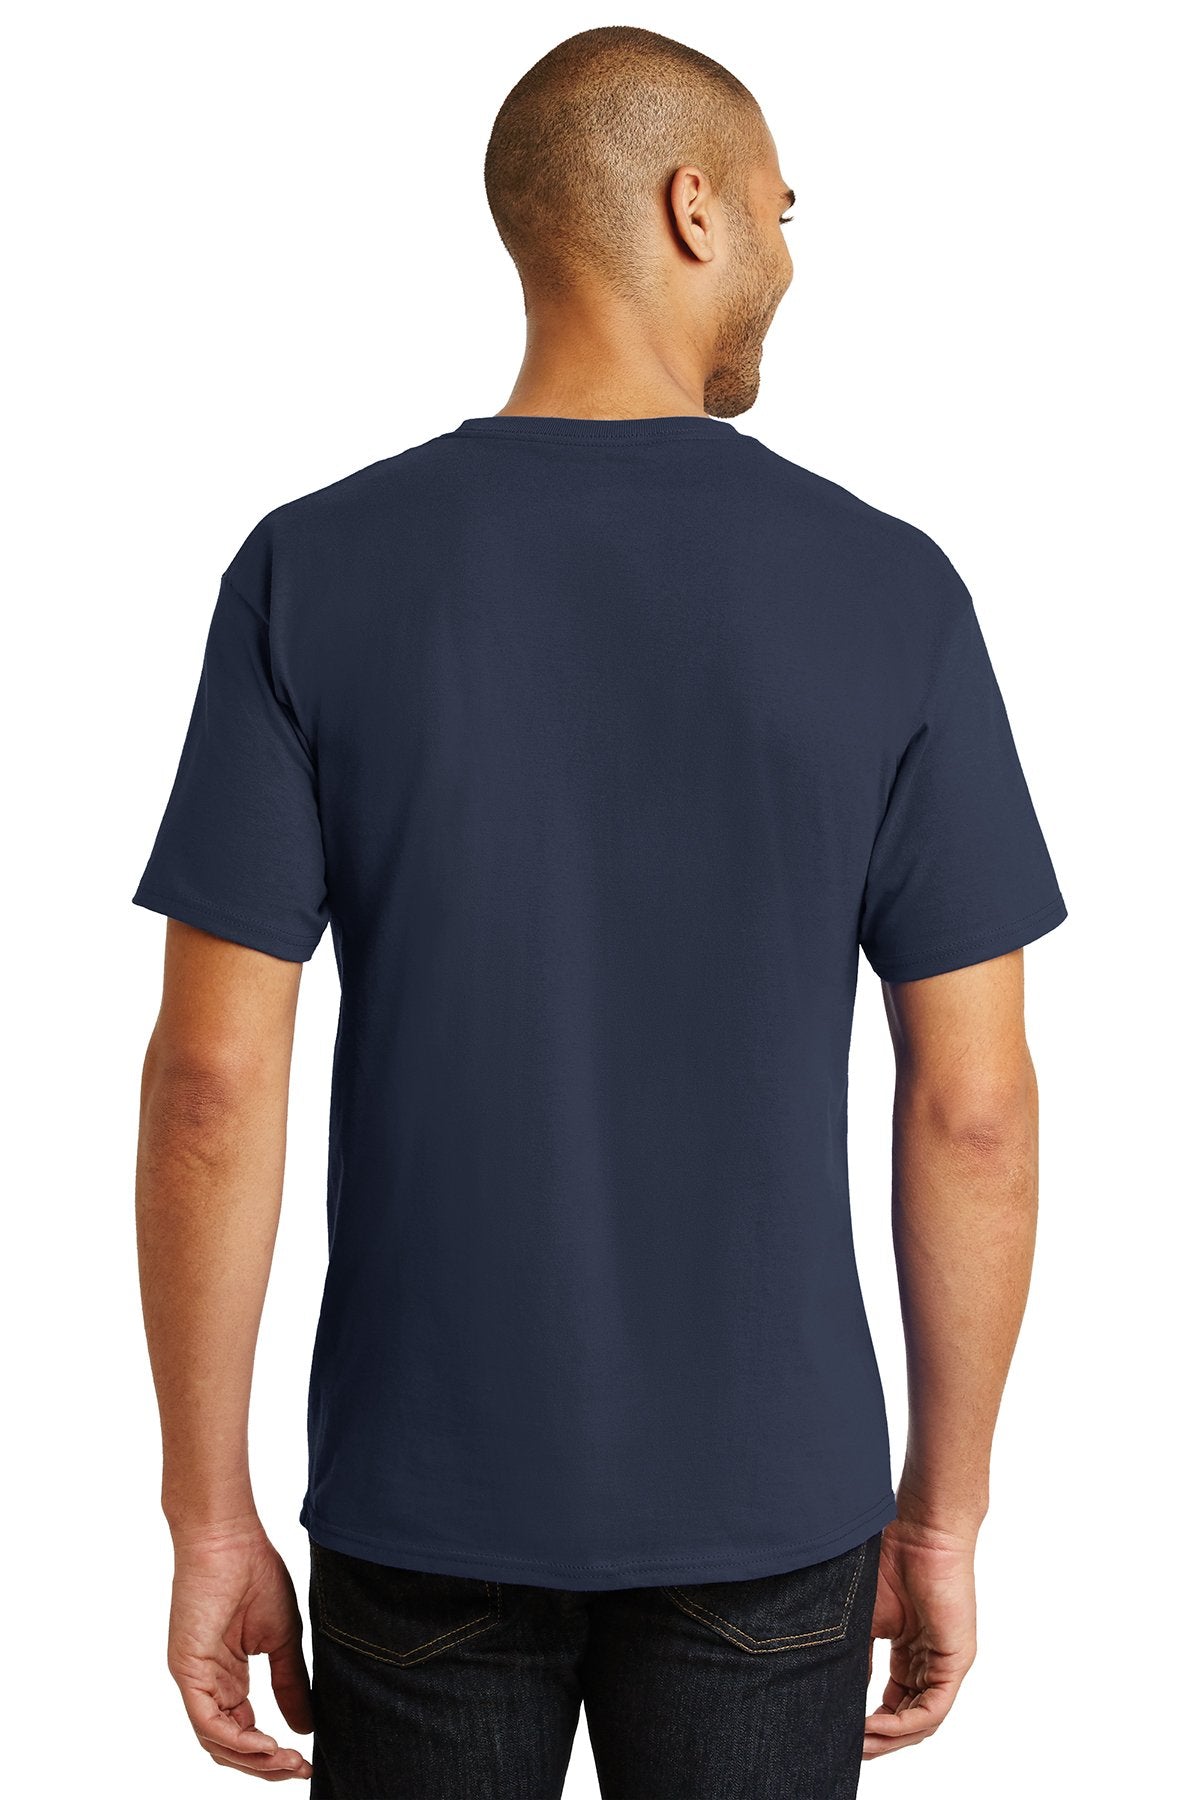 hanes tagless cotton t shirt 5250 navy